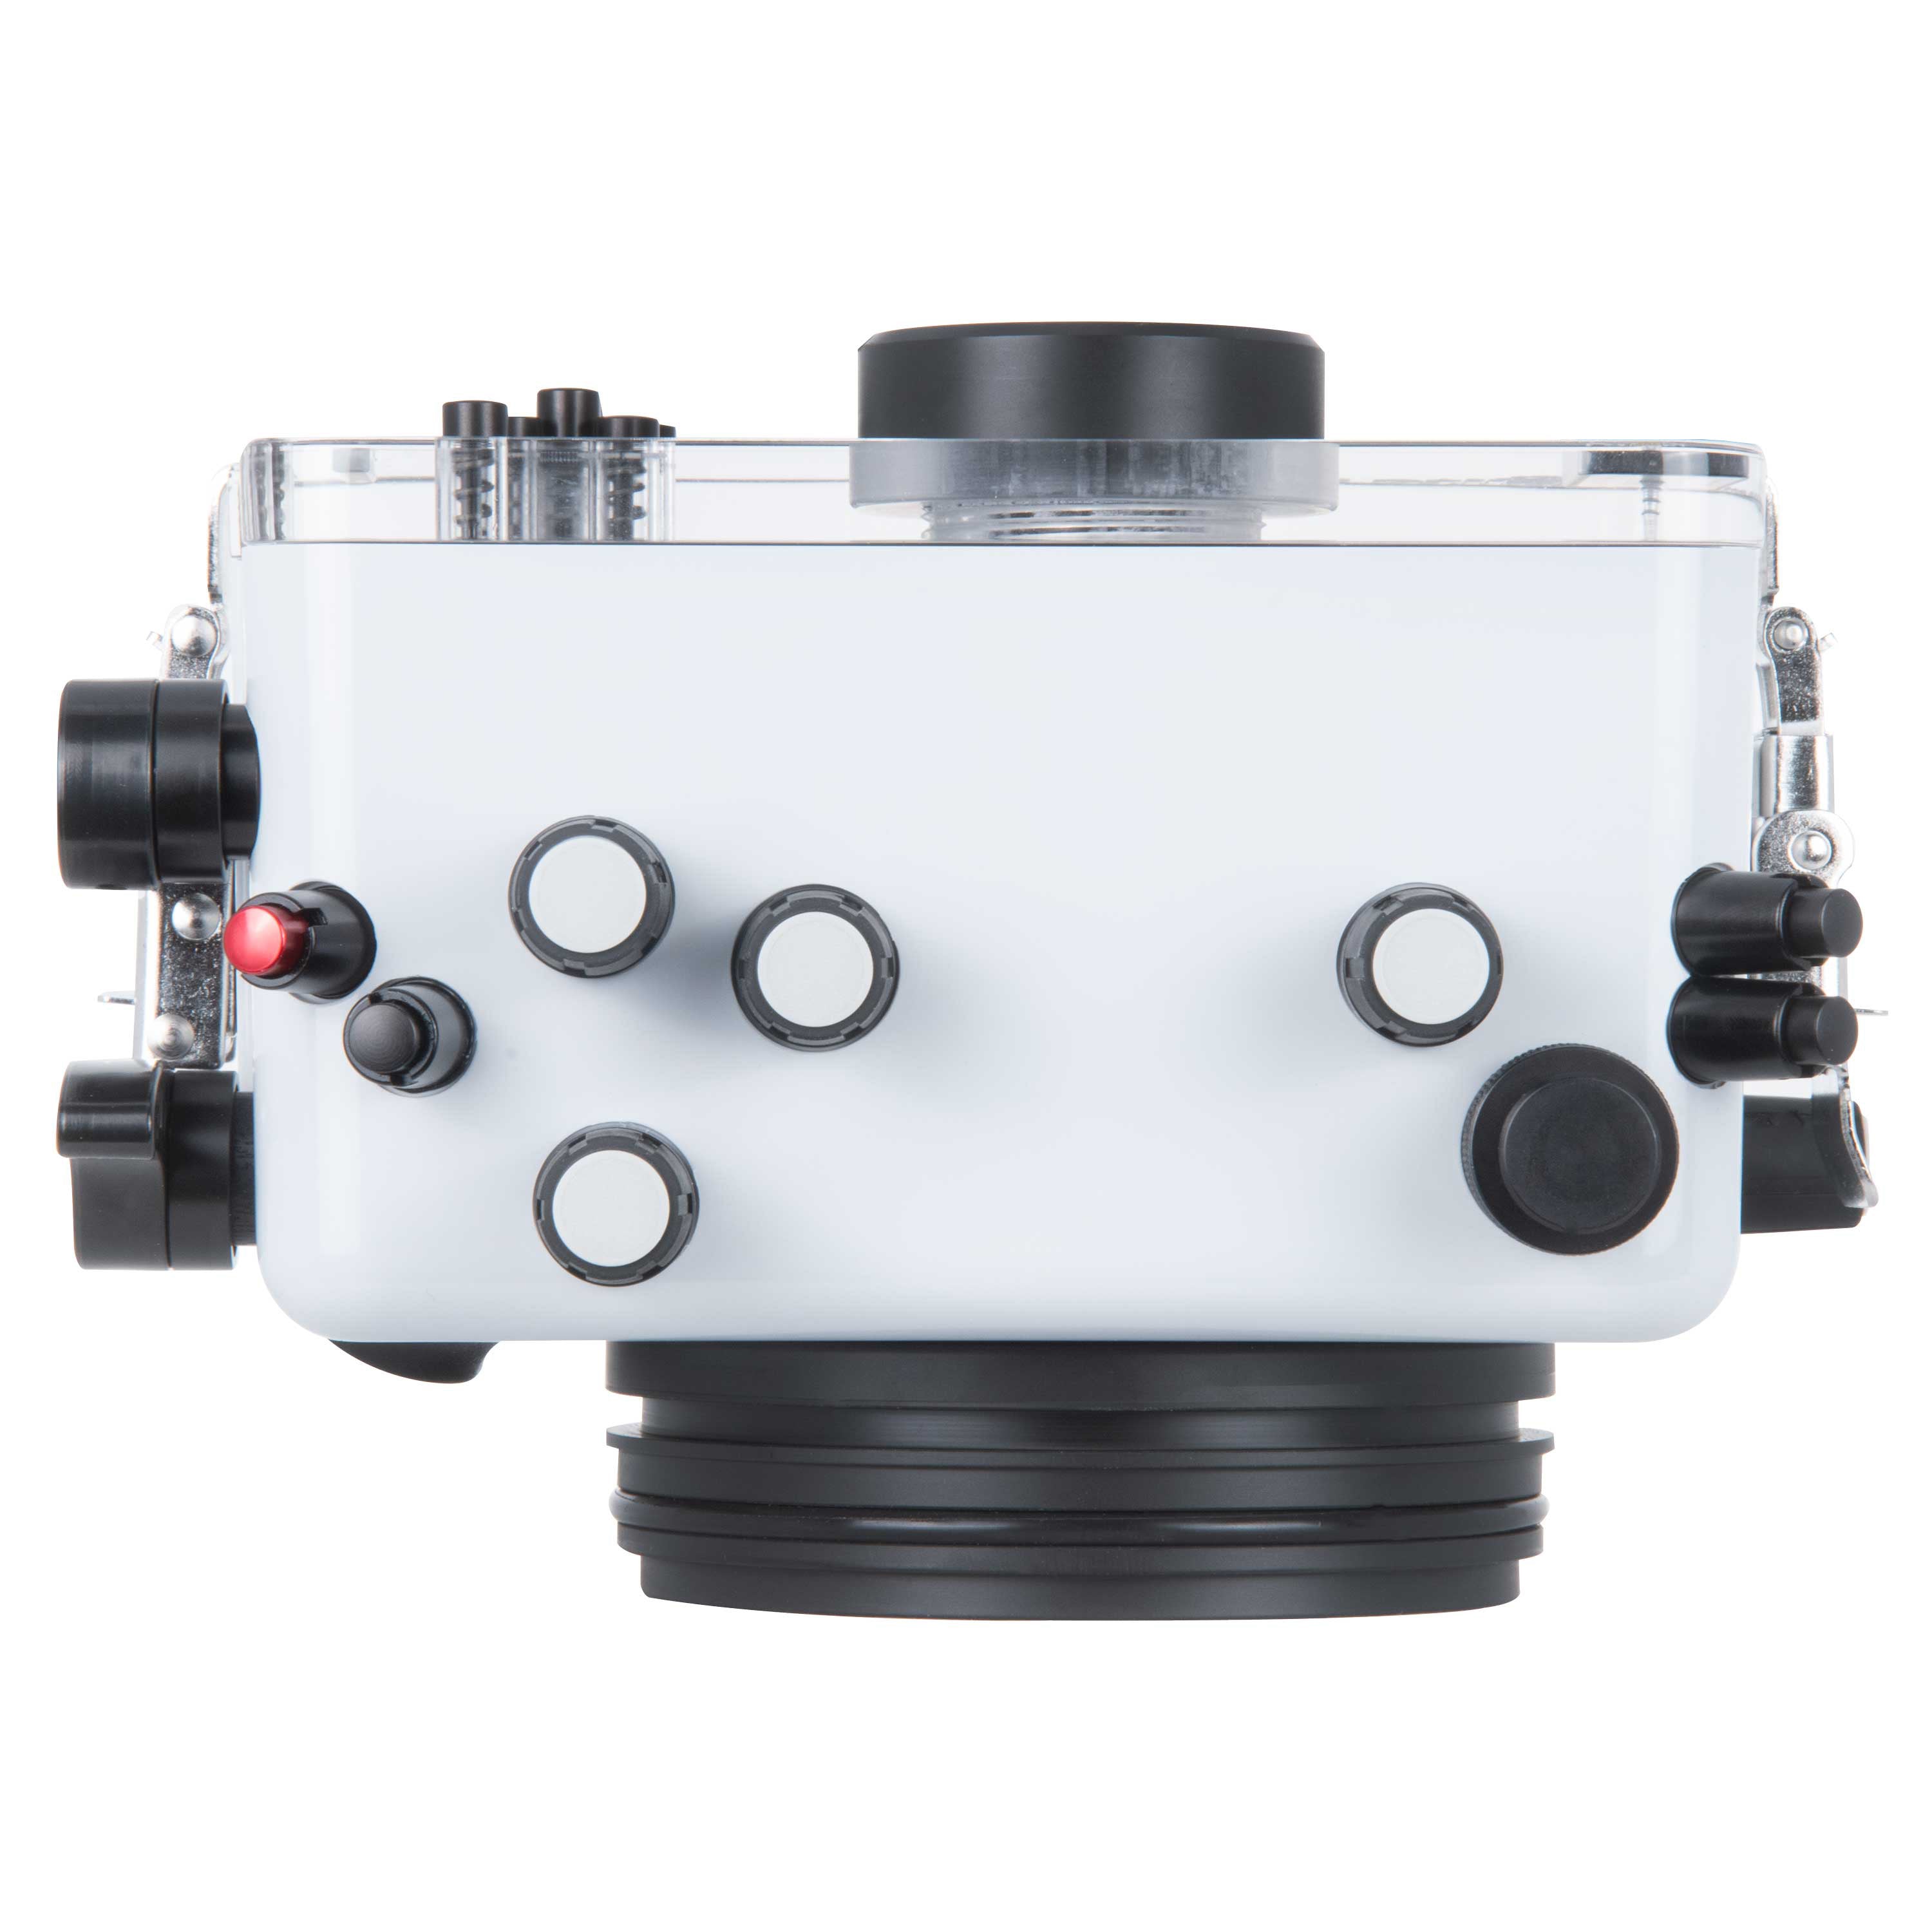 Ikelite 200DLM/A Underwater Housing for Olympus OM-D E-M5 III Mirrorless Cameras